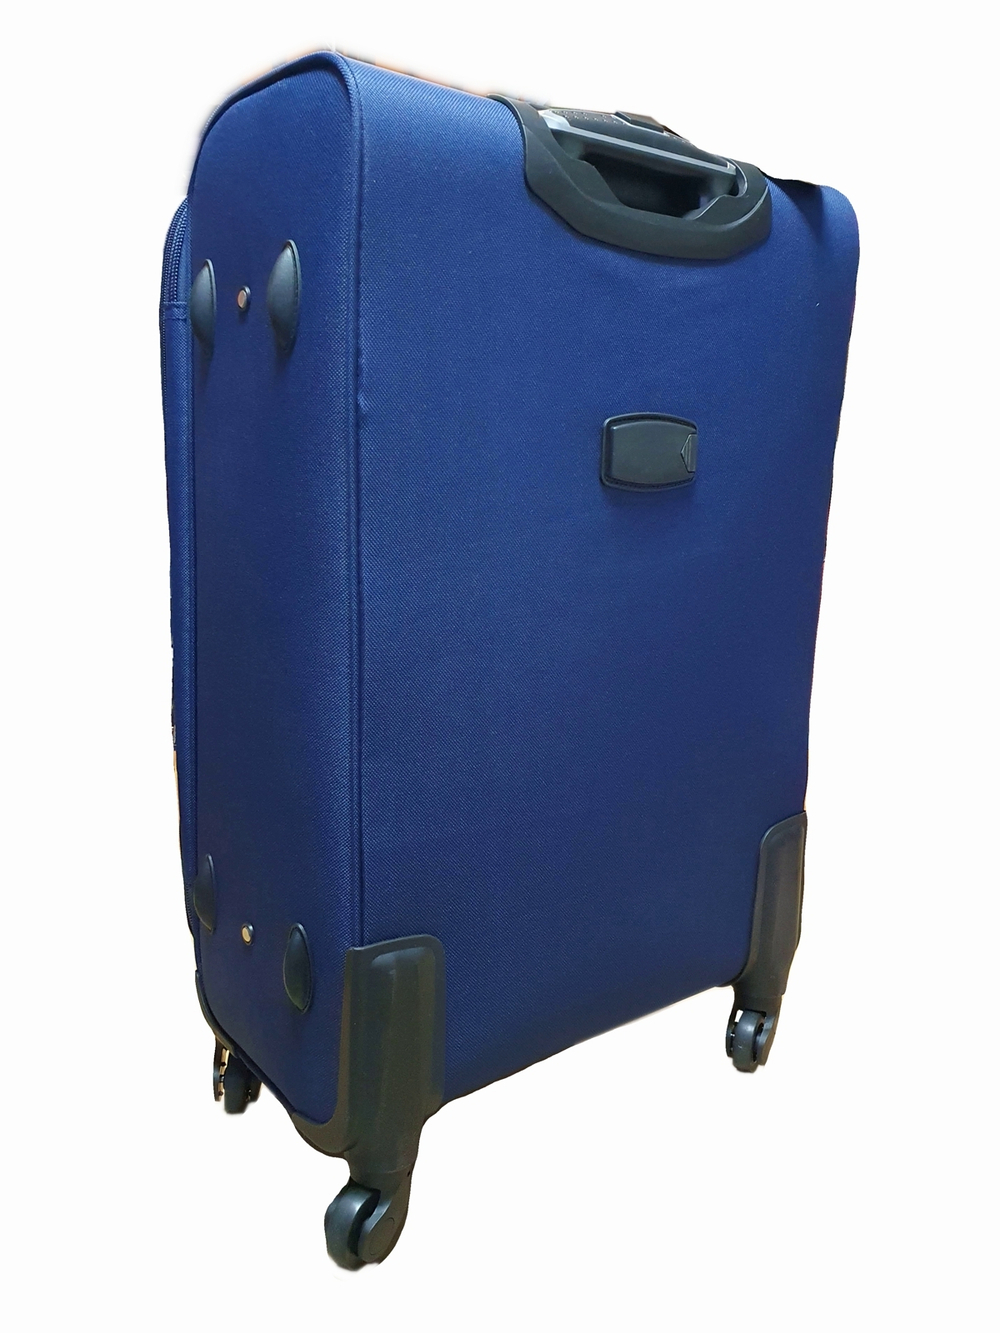 Чемодан на колесах тканевый L’case Barcelona размера XL (82х54х33 (+5) см), объем 138 литров, вес 4.5 кг, Синий